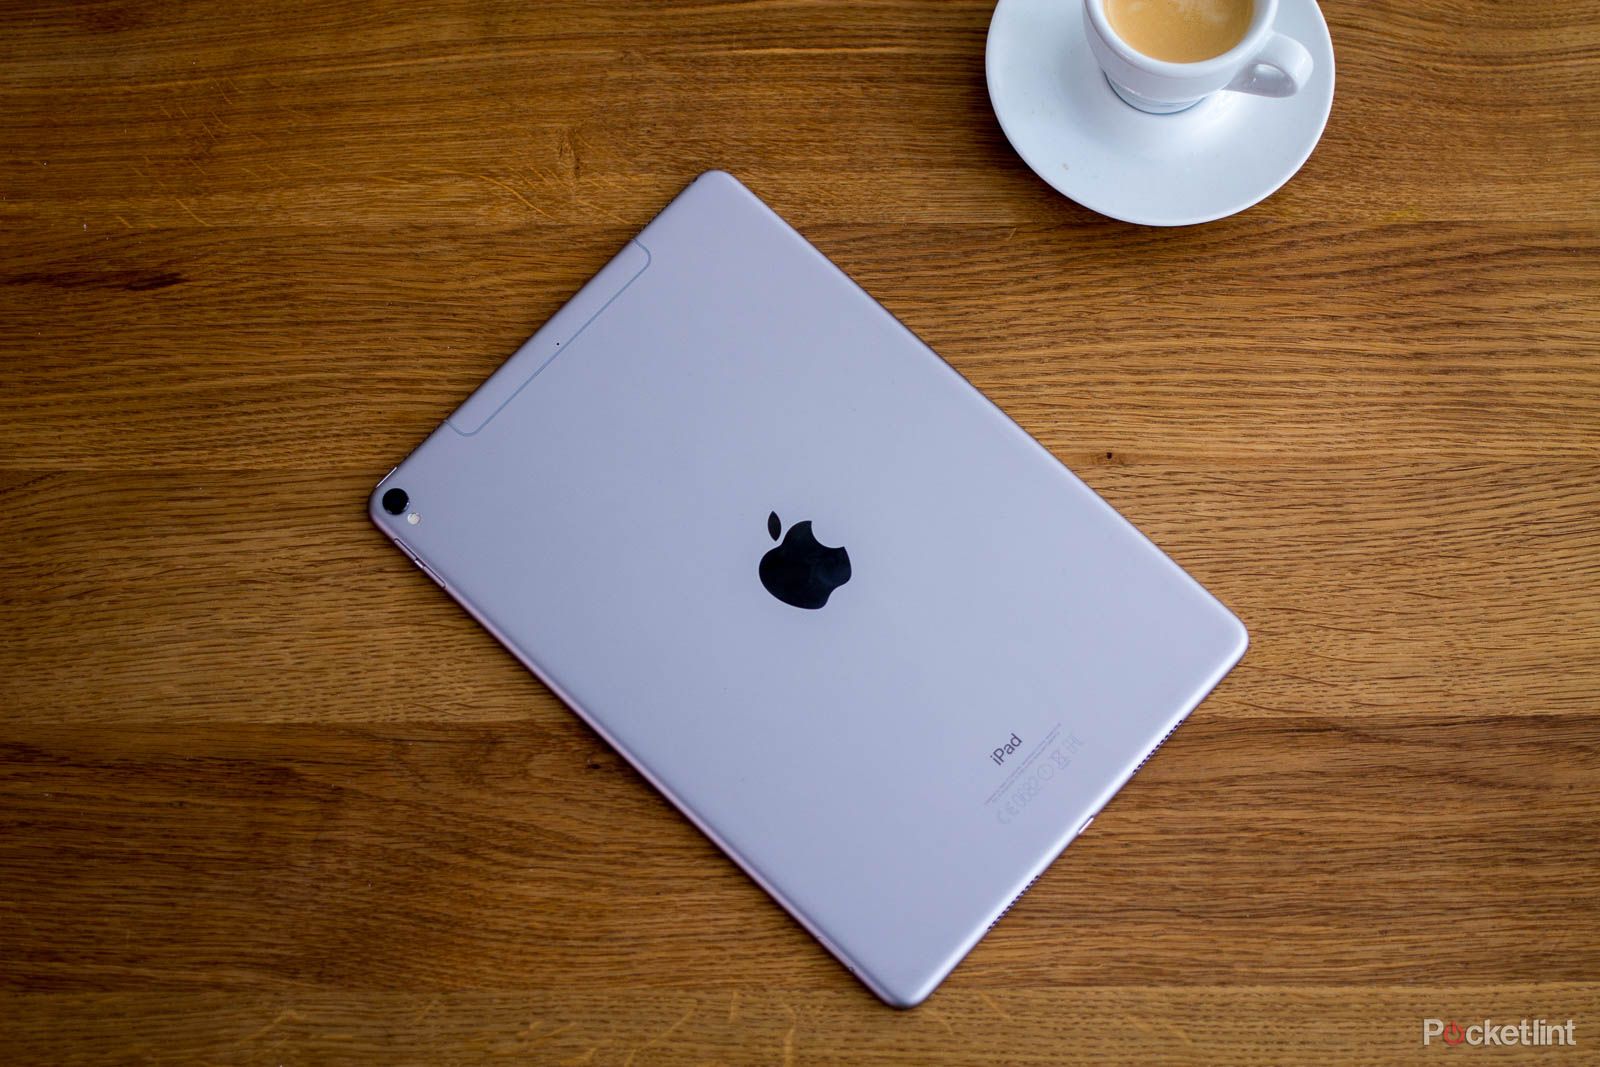 iPad Pro 10 5 review photos image 4